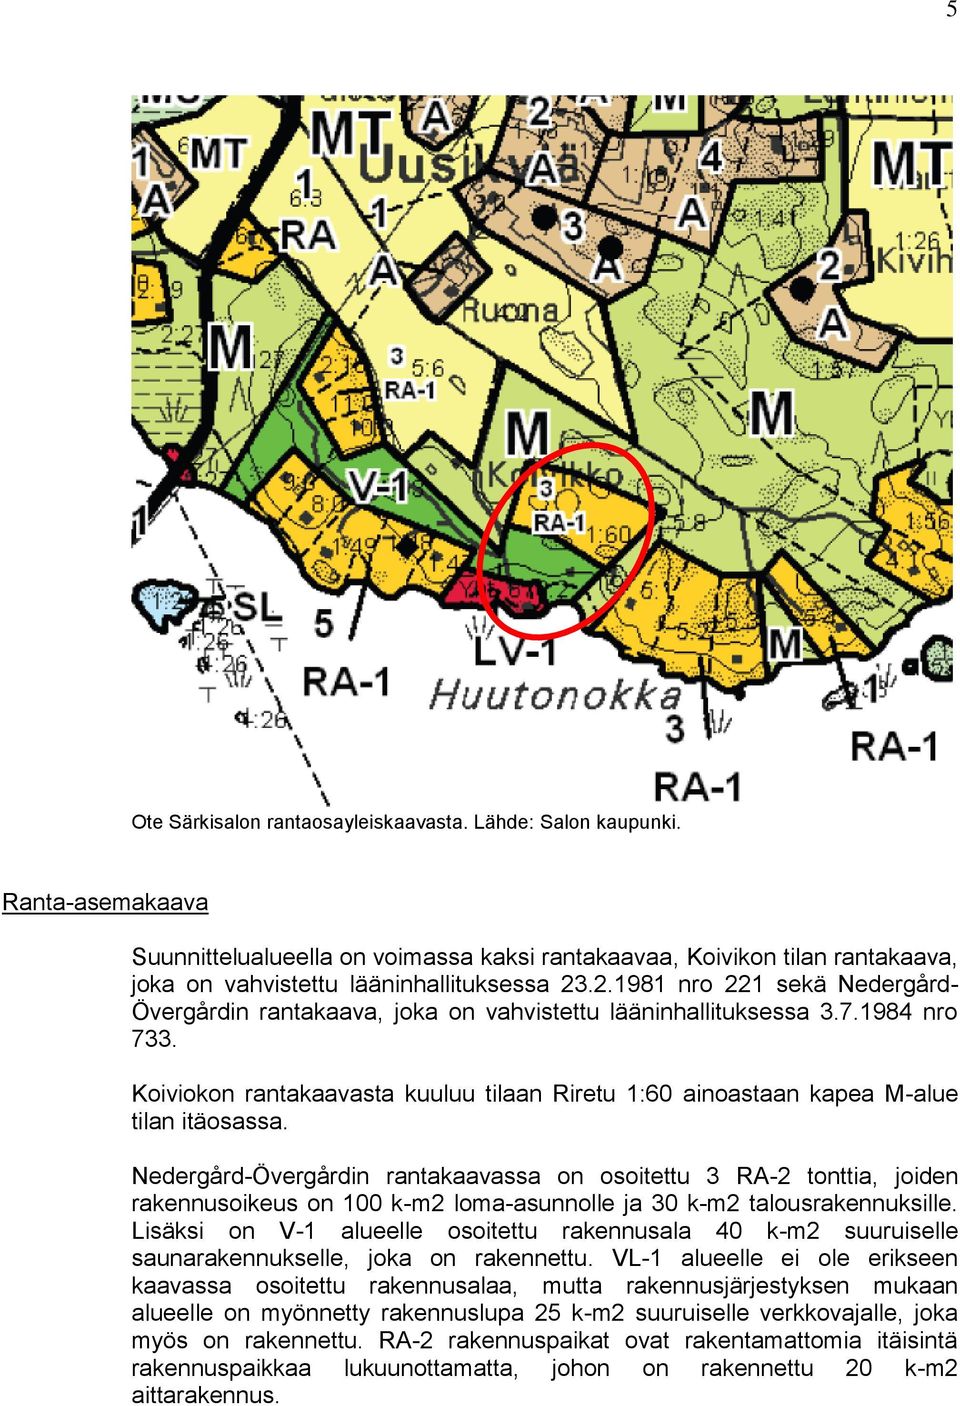 .2.1981 nro 221 sekä Nedergård- Övergårdin rantakaava, joka on vahvistettu lääninhallituksessa 3.7.1984 nro 733.